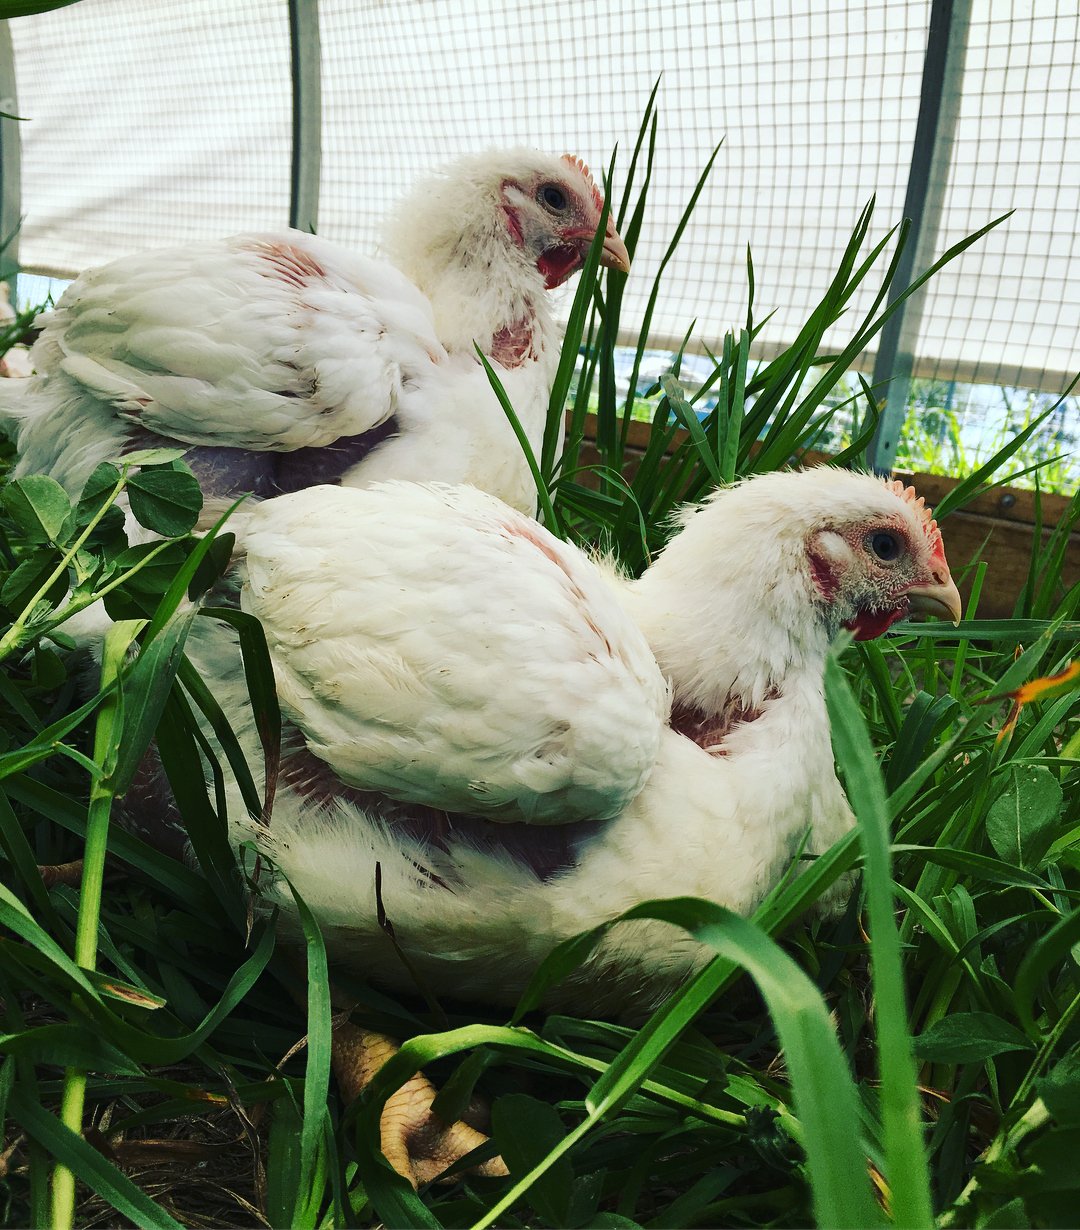 Next Happening: Farm Happenings for June 28, 2018 Chicken Share